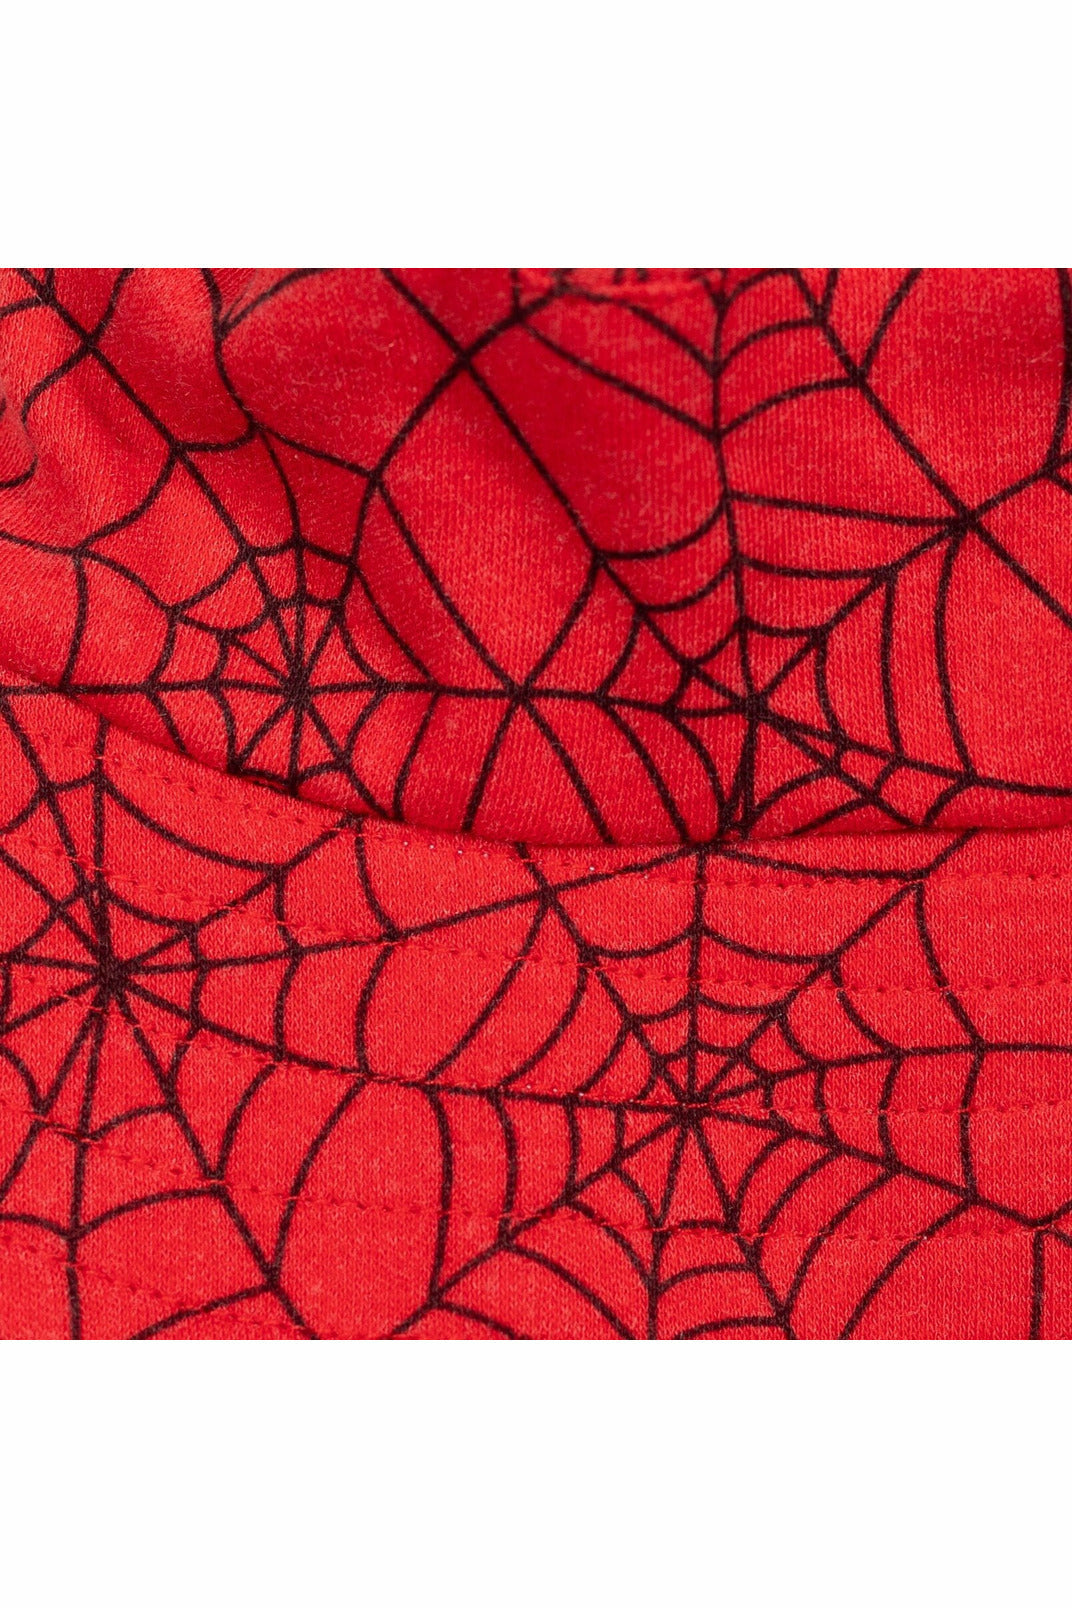 Spider-Man Short Sleeve Romper & Sunhat Set